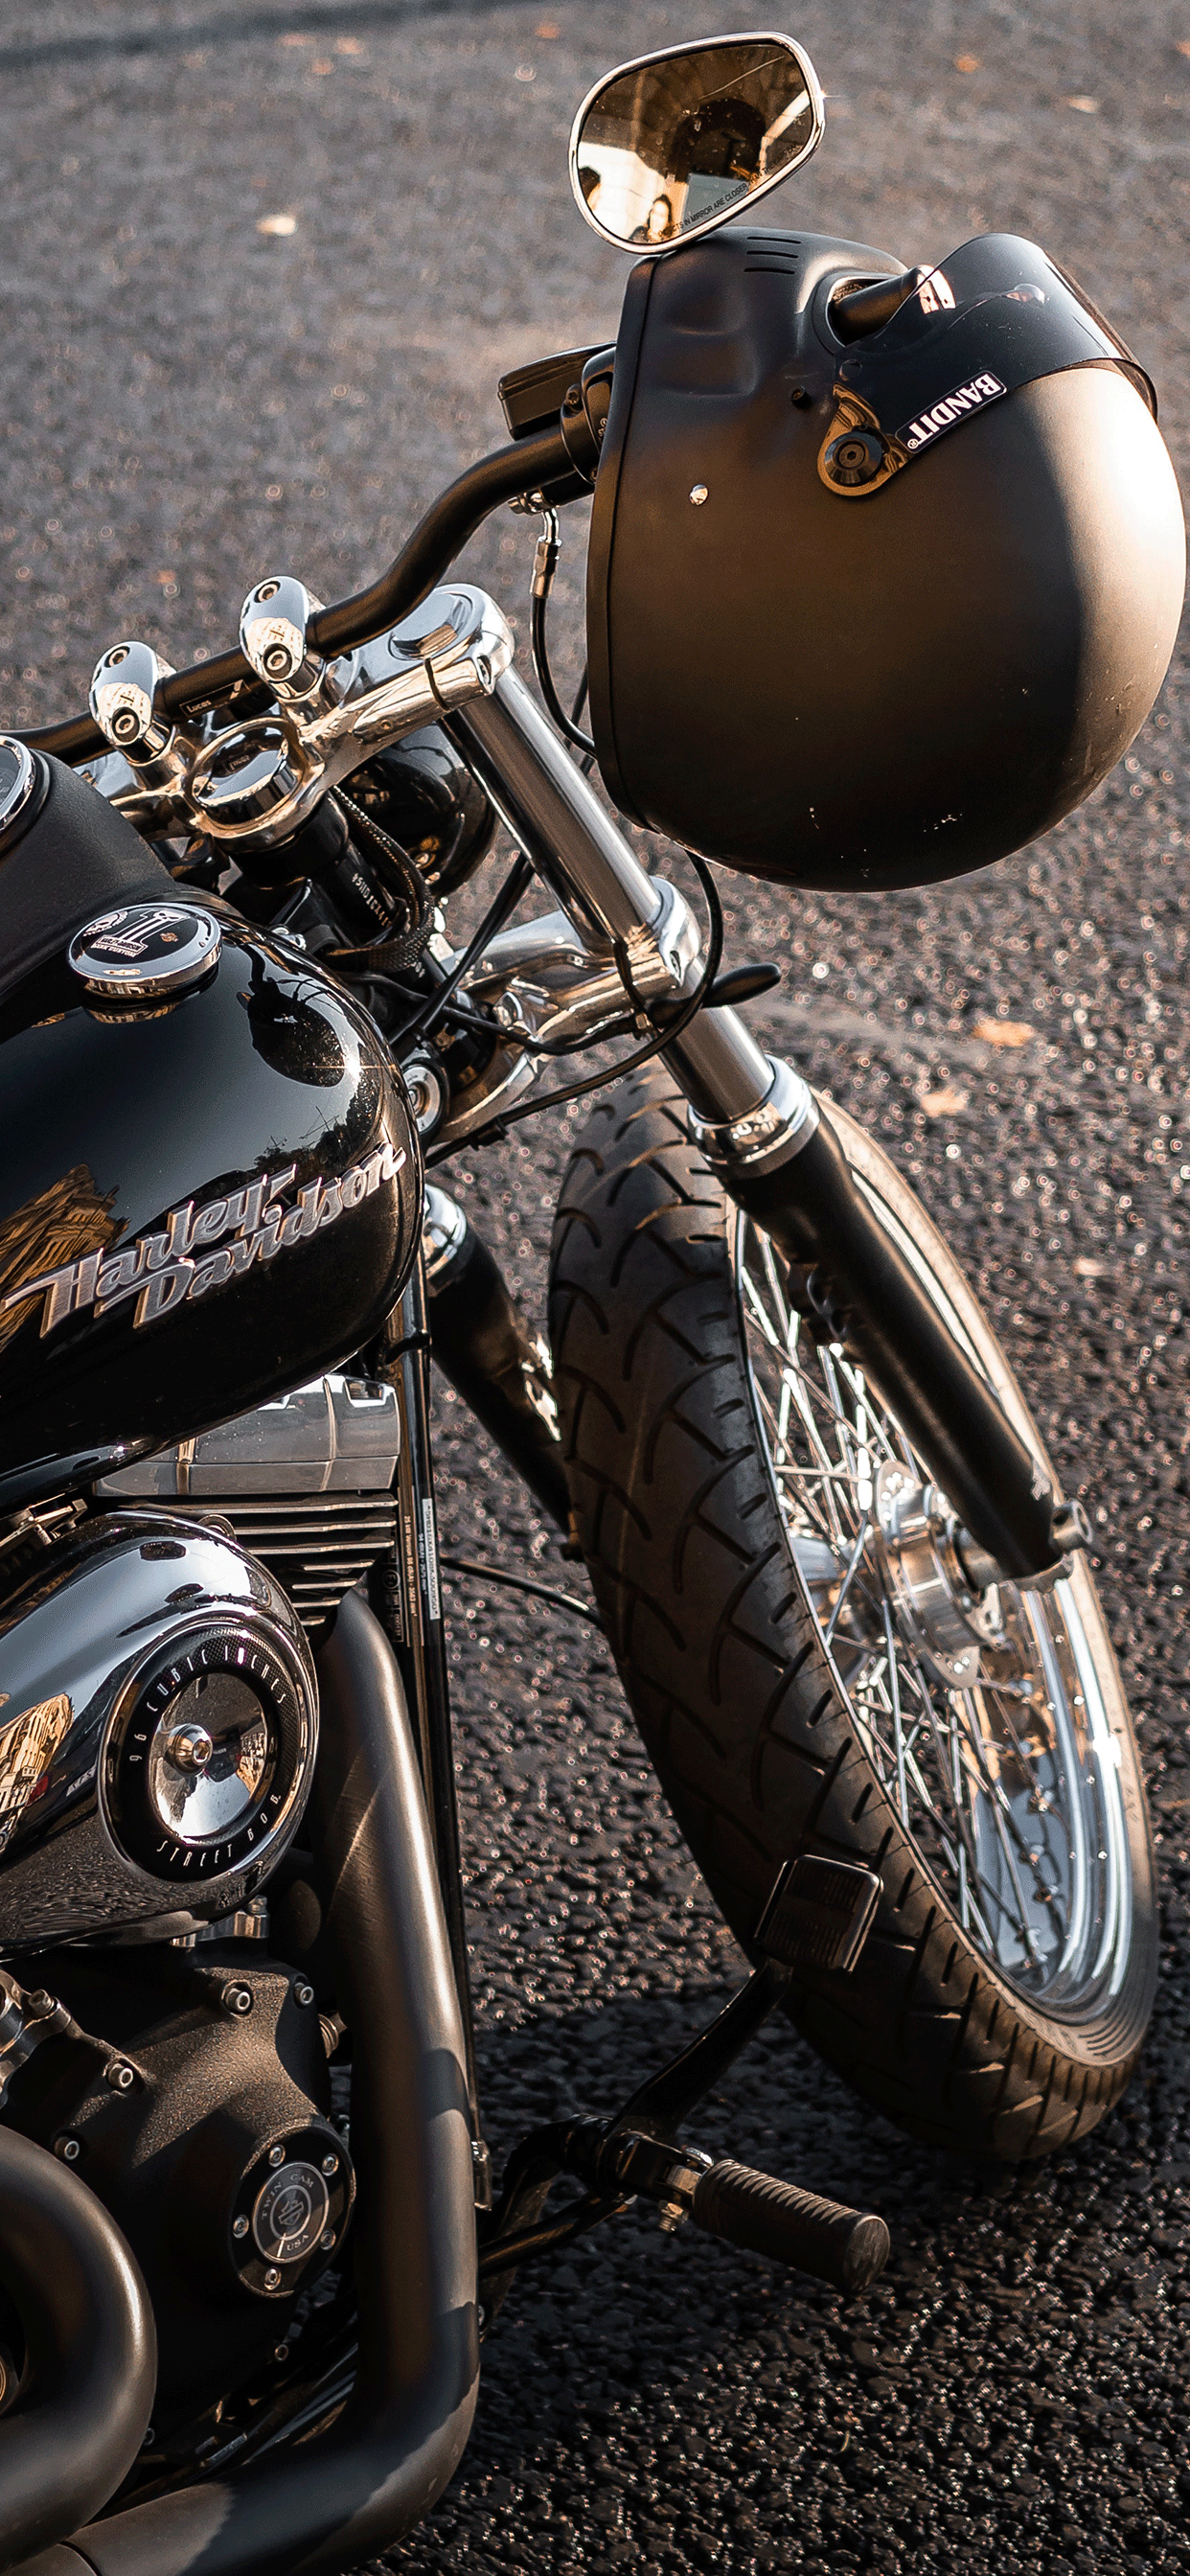 Harley Davidson iPhone Wallpaper Ipcwallpaper Motorcycle